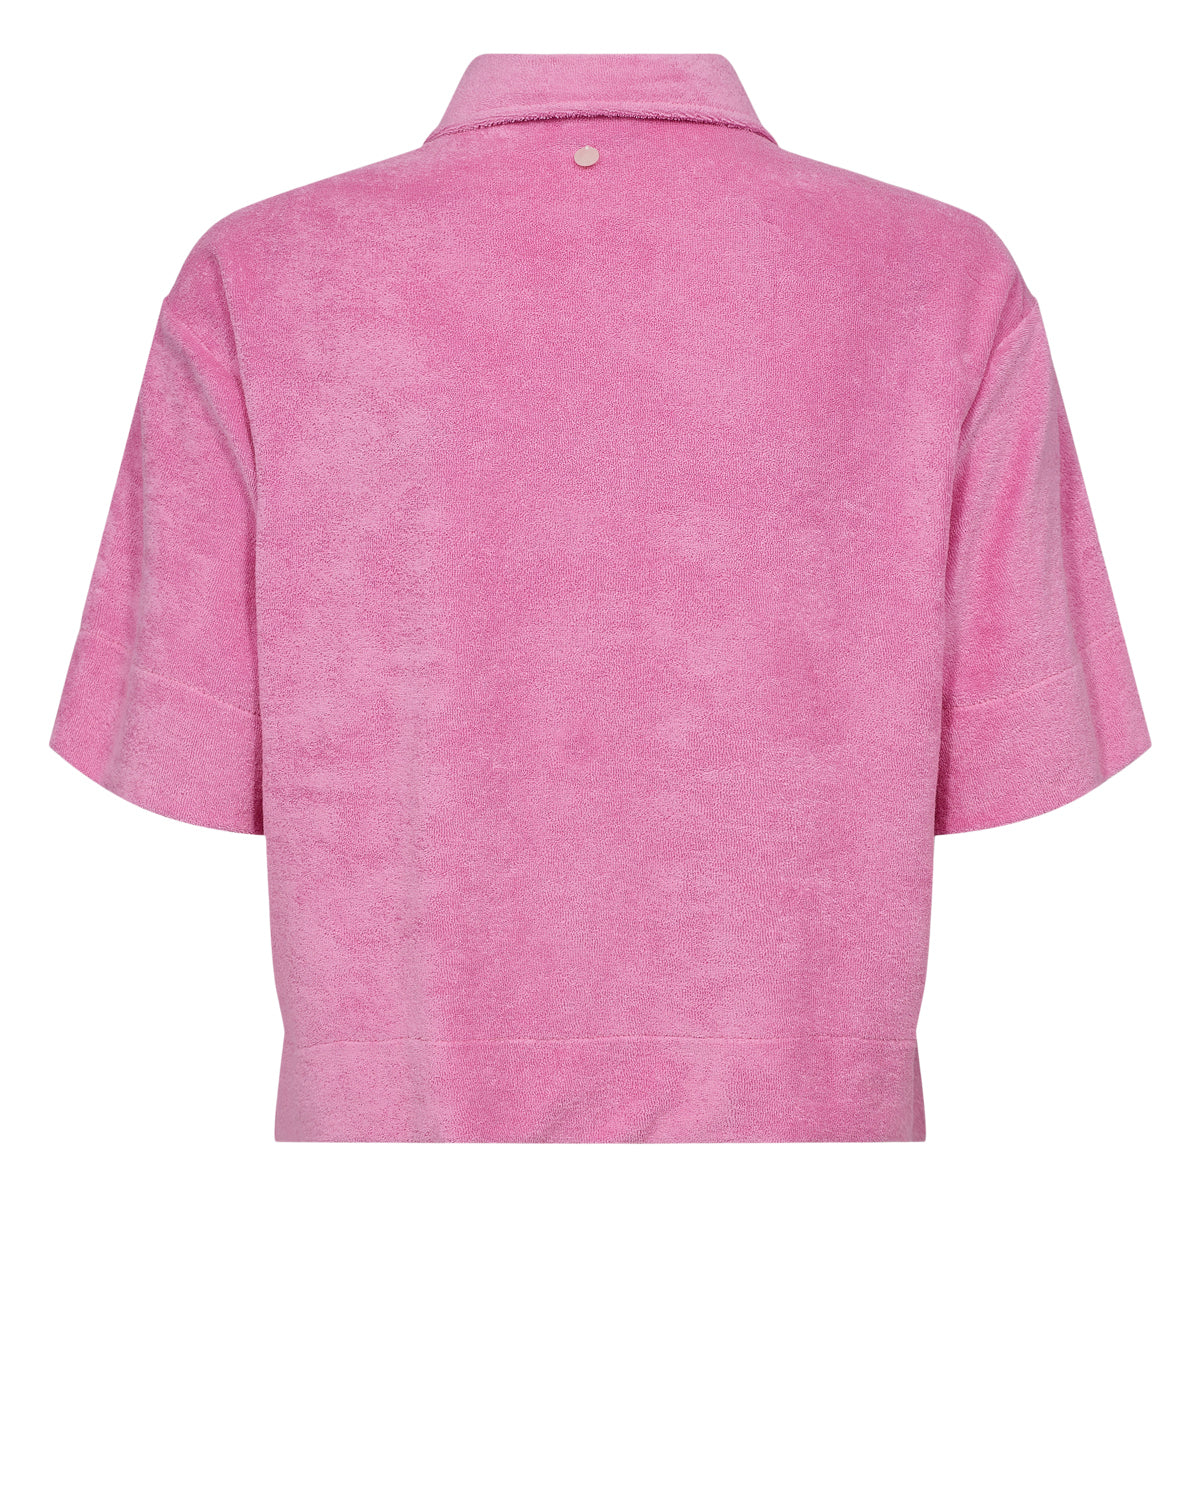 Numph nufrotte shirt - Fuchsia pink